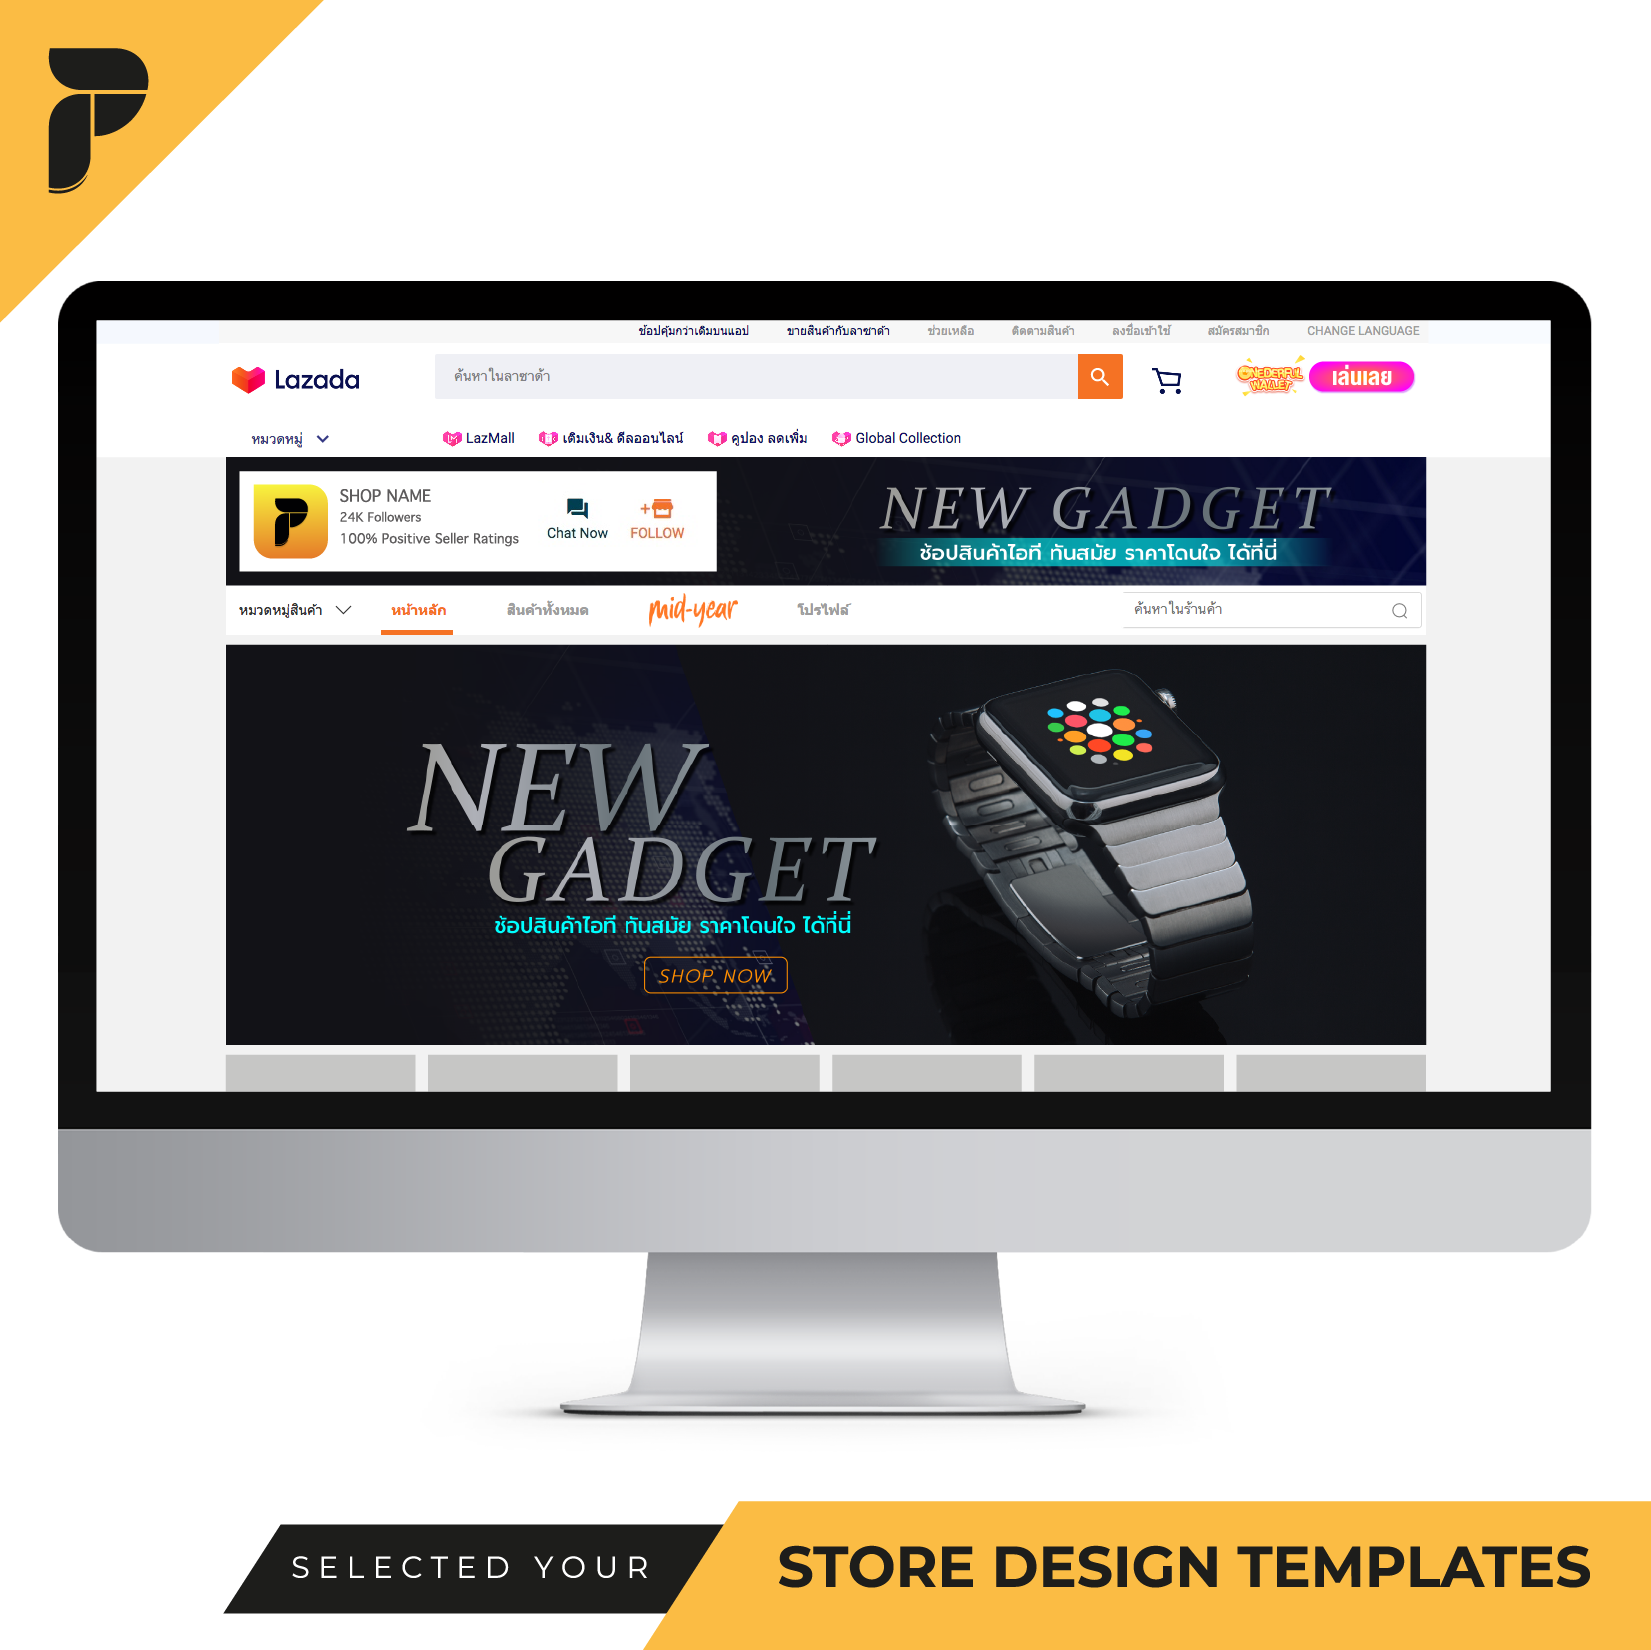 Store Design Template Banner by PathGraphic Studio - Gadgets แบนเนอร์ตกแต่งร้าน แบนเนอร์สำเร็จรูป สำหรับตกแต่งหน้าร้านค้าออนไลน์